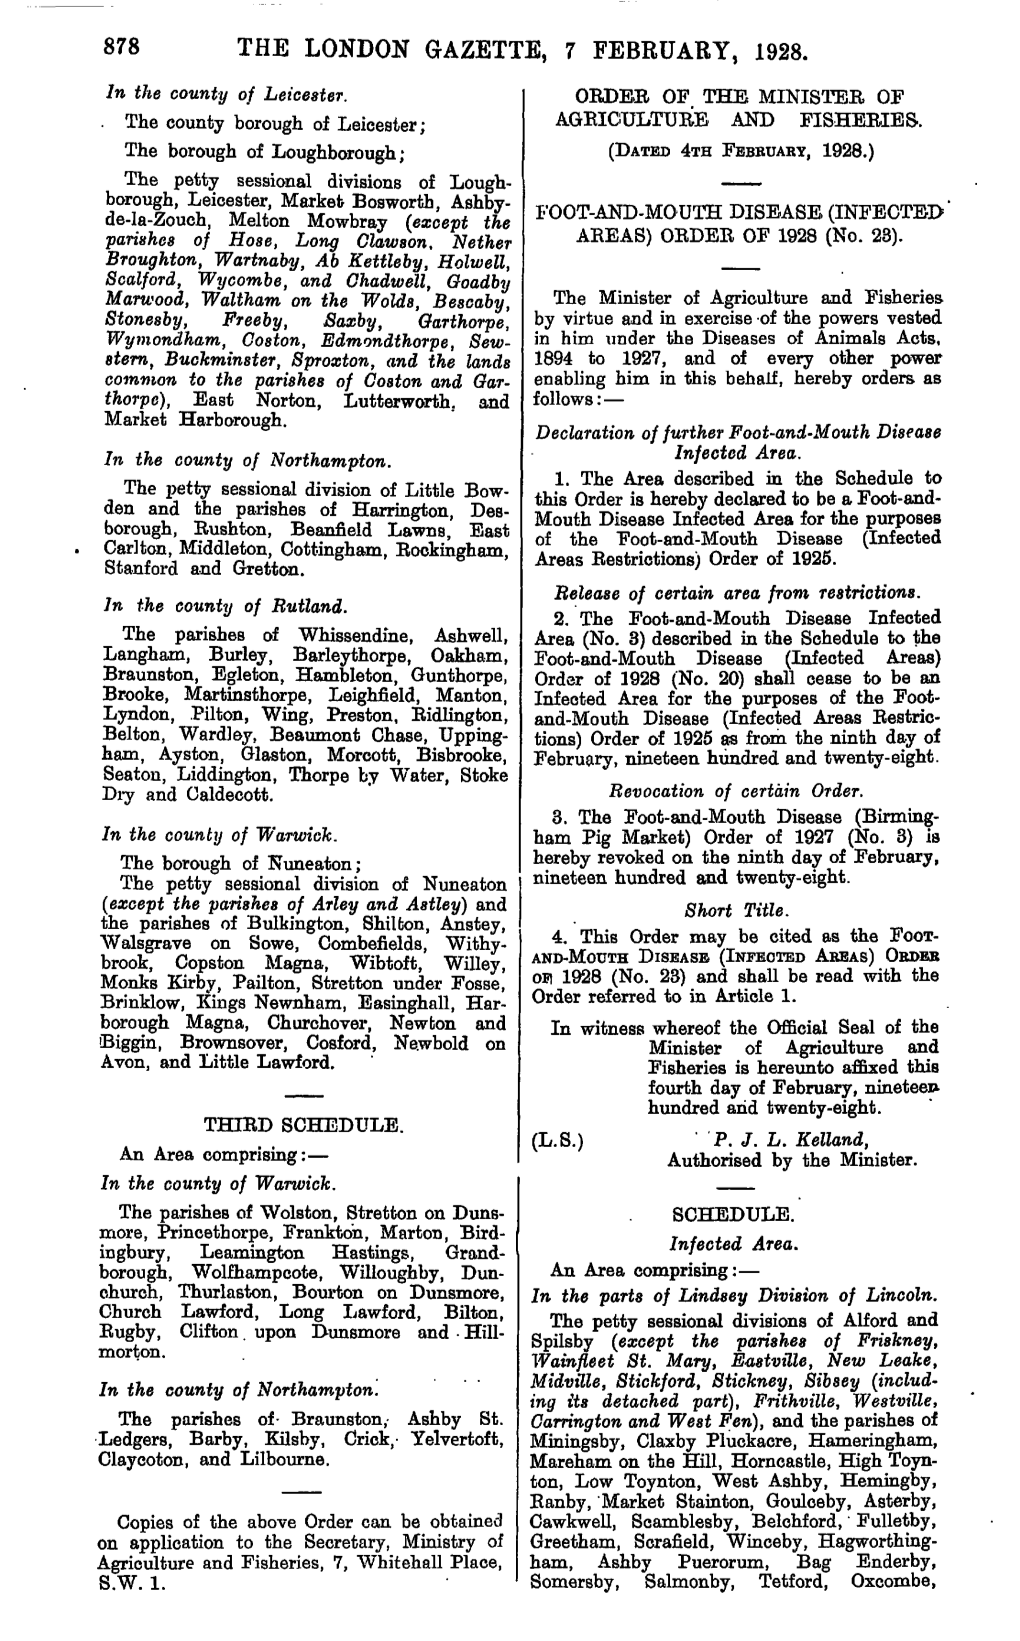 878 the London Gazette, 7 February, 1928